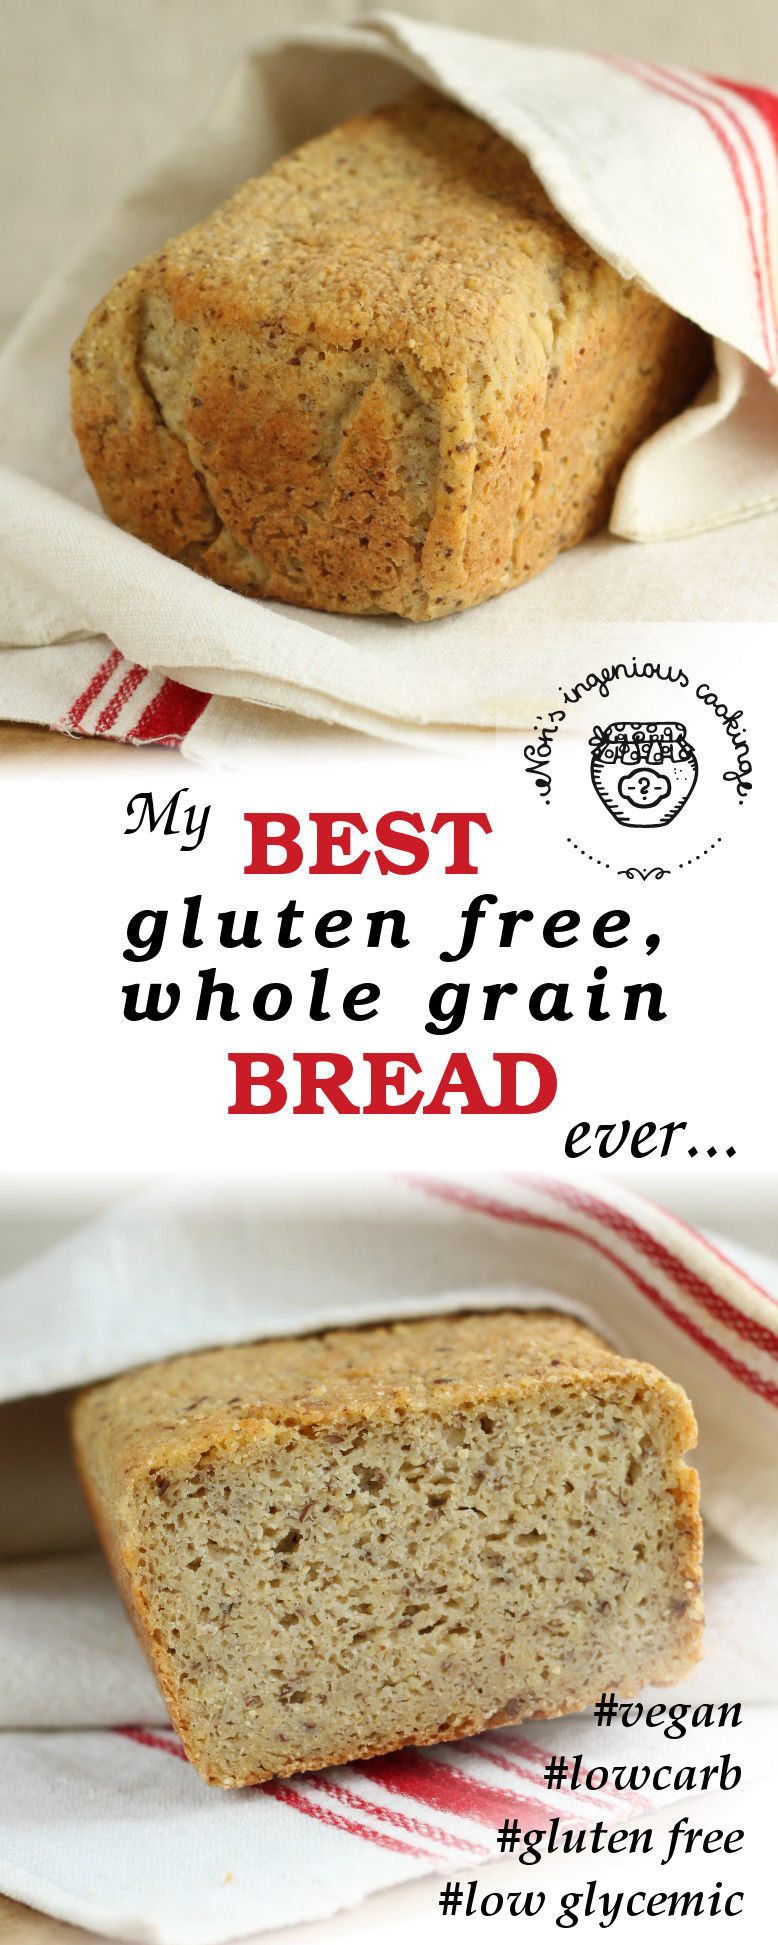 Best Vegan Gluten Free Bread
 My best gluten free whole grain bread ever vegan